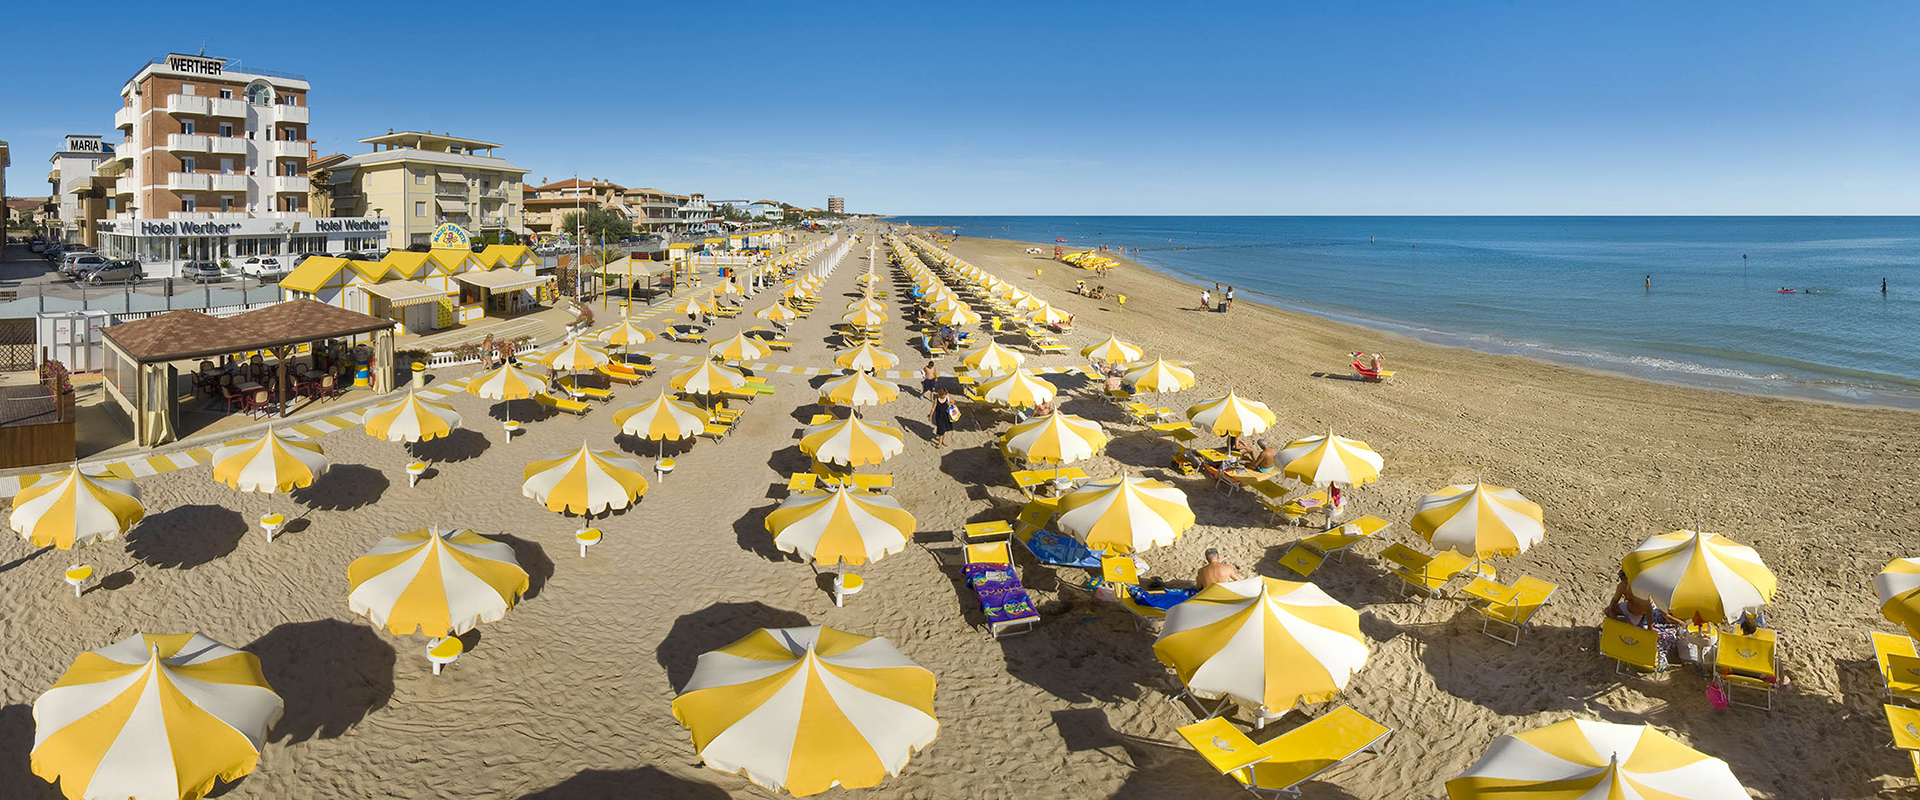 Hotel on the Adriatic Sea